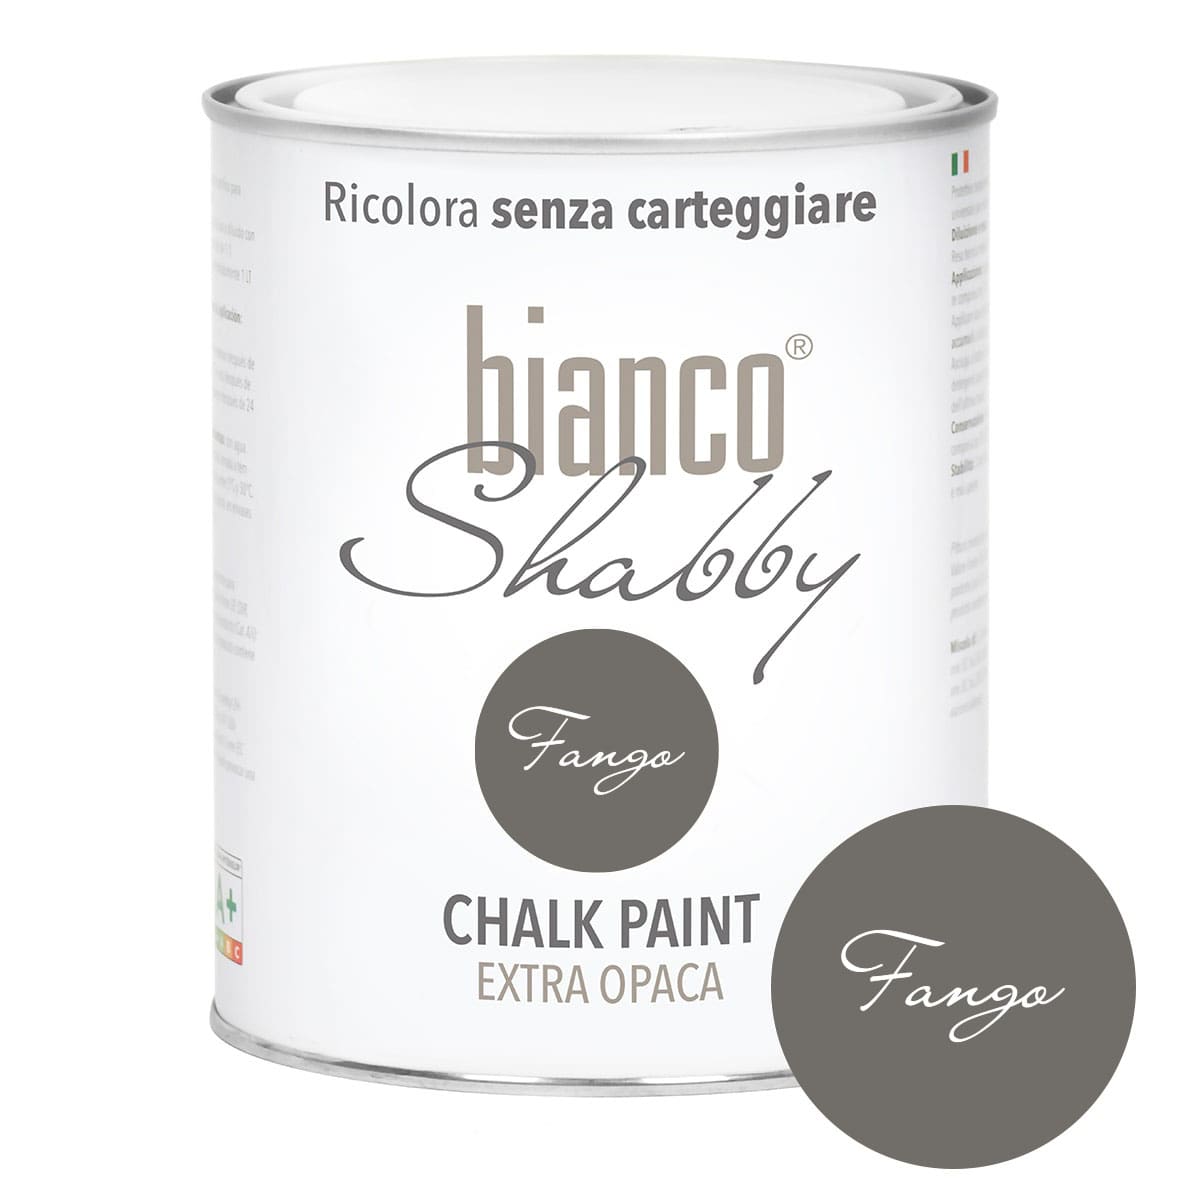 Chalk Paint extra opaca biancoShabby® - Ricolora mobili pareti